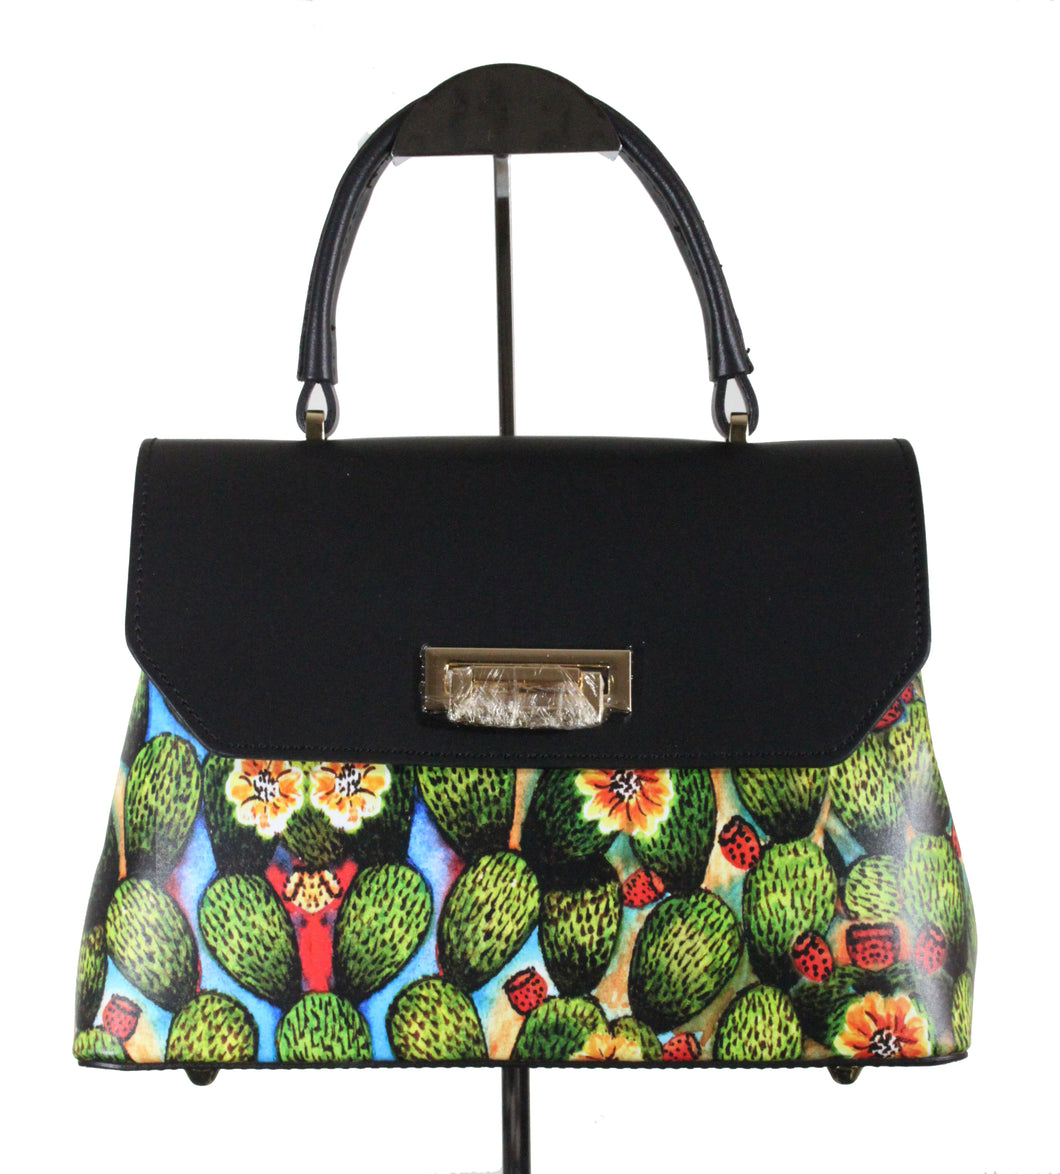 Marika model clutch bag - Black prickly pears